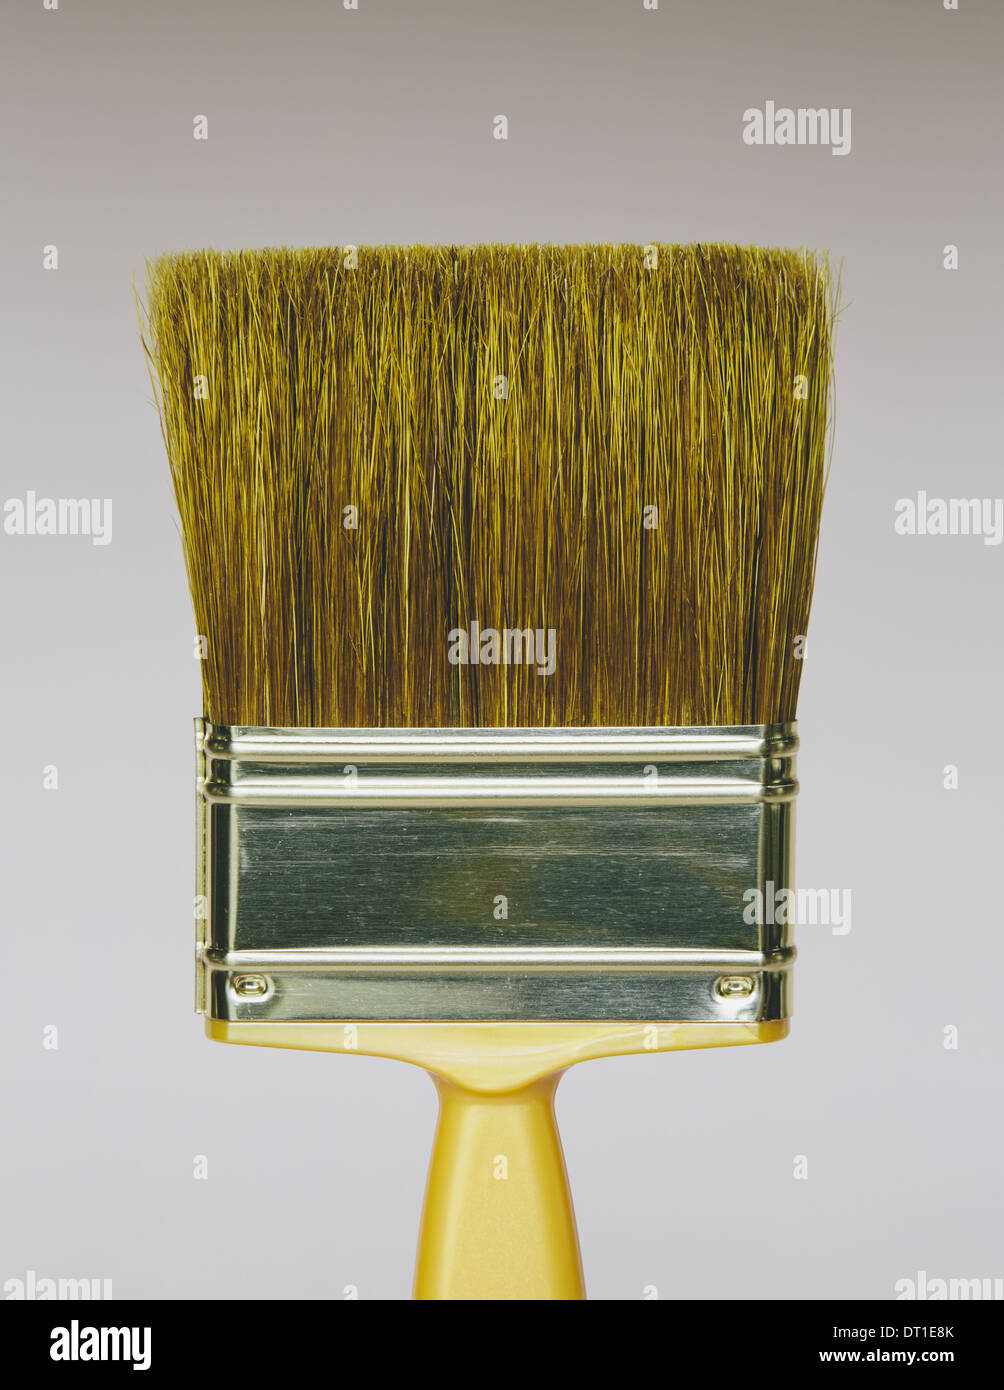 bristle paintbrush with yellow handle Stock Photo